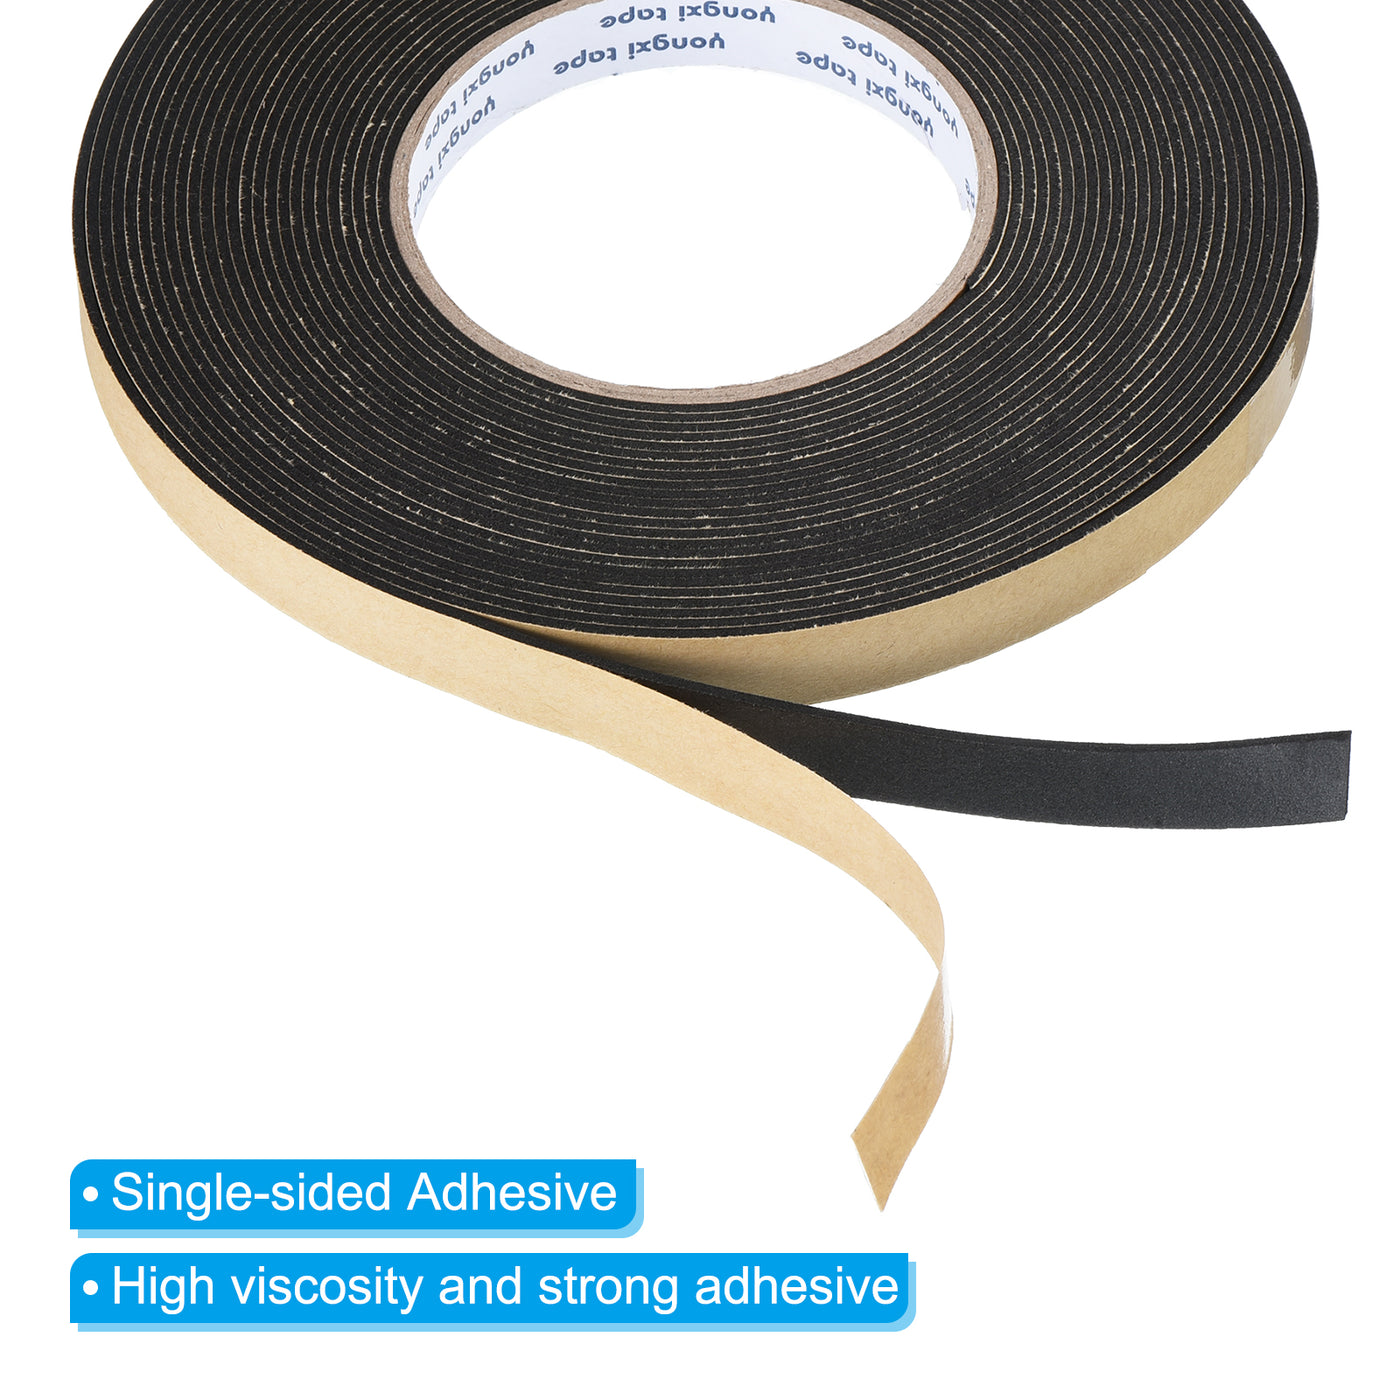 Harfington Foam Tape Weather Strip, 2 Rolls 15mmx1.5mmx10m Weather Stripping Door Seal EVA Foam Tape Insulation Strip